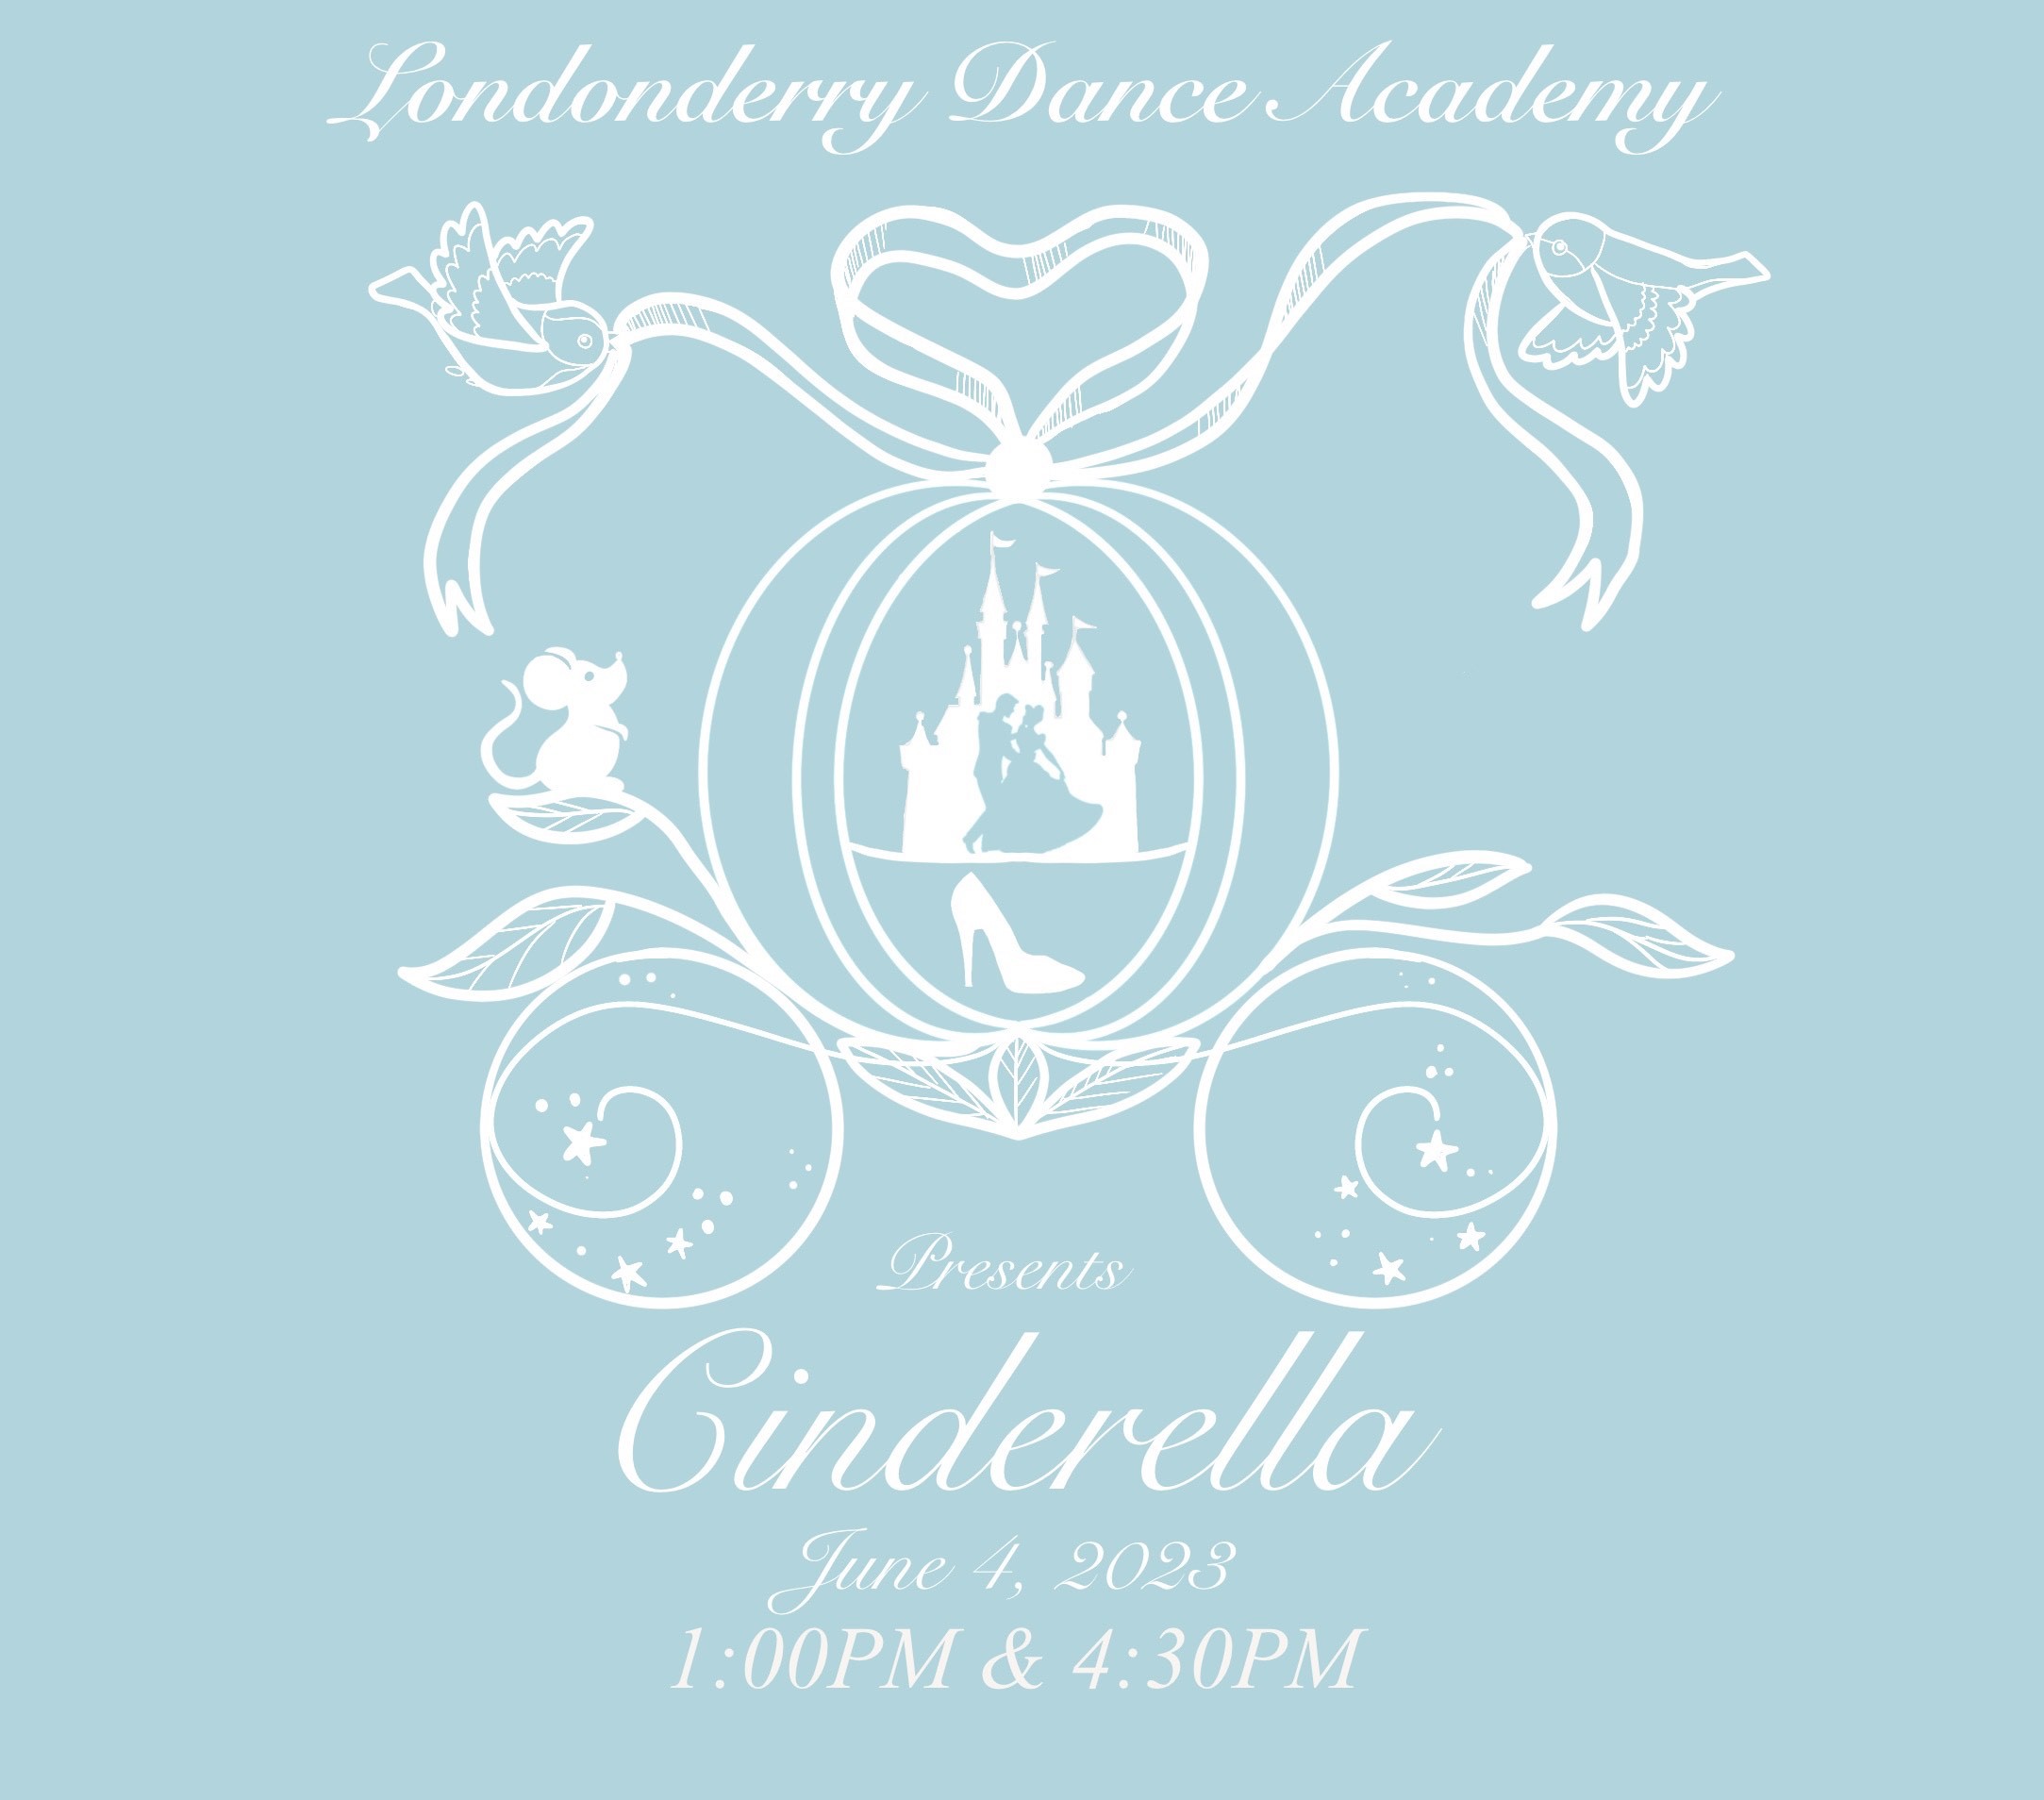 Londonderry Dance Academy Presents Cinderella